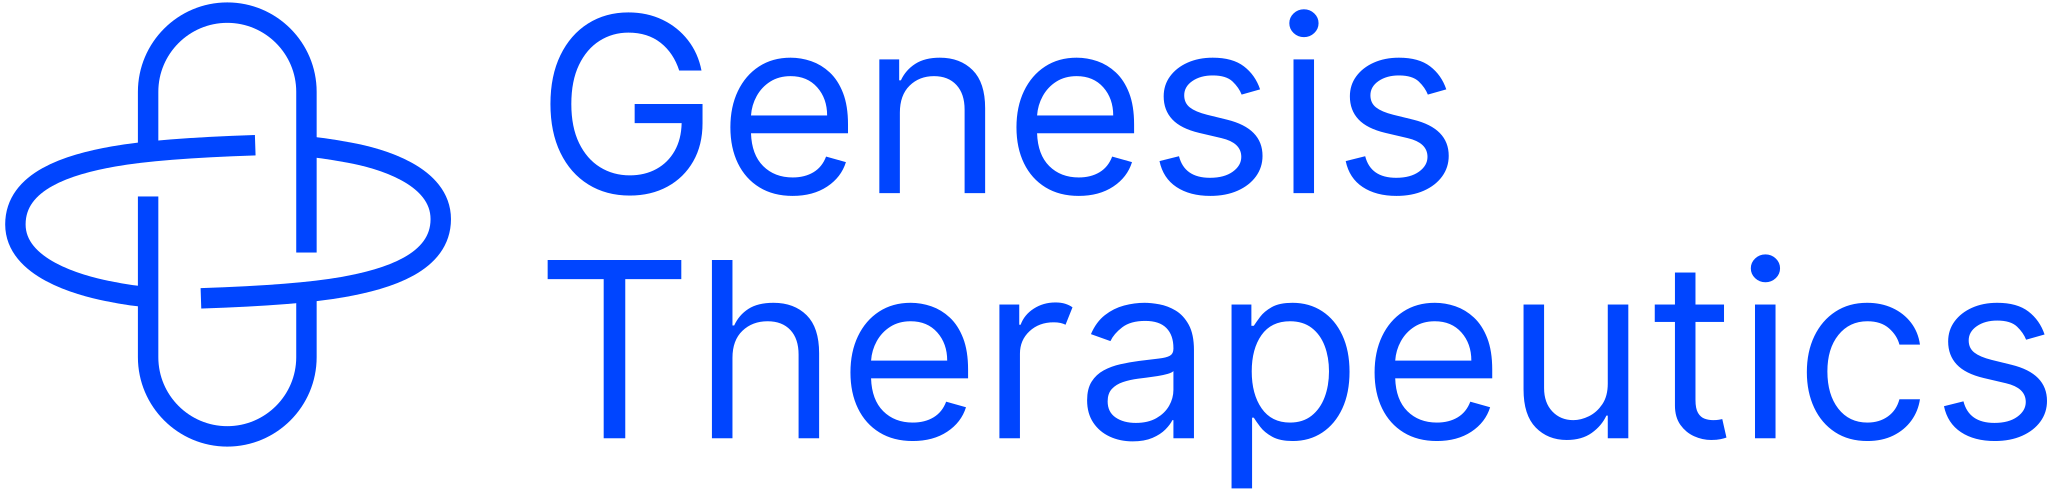 Genesis Therapeutics